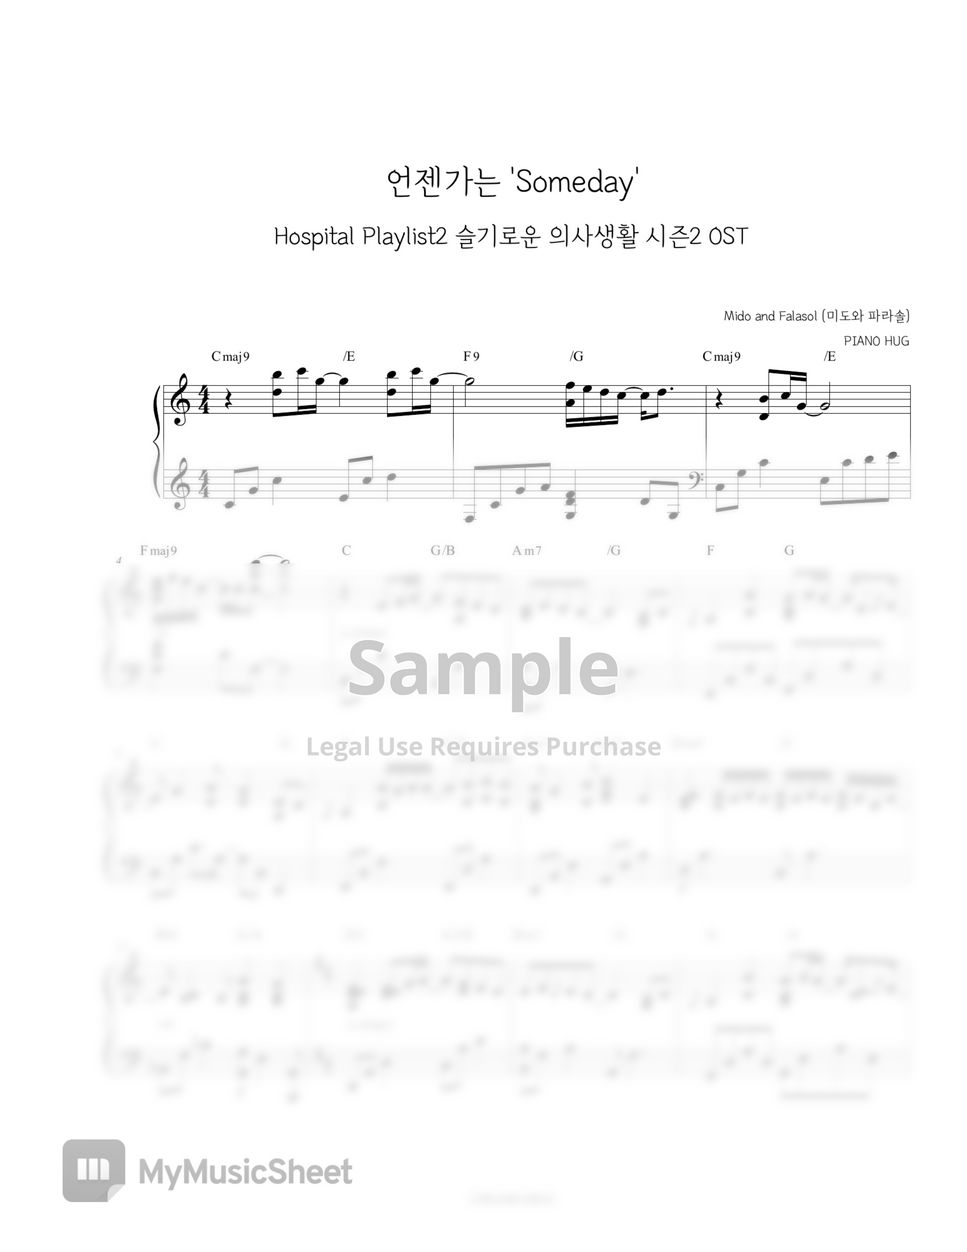 Mido and Falasol (미도와 파라솔) - Someday '언젠가는' (Hospital Playlist Season2 OST) by Piano Hug